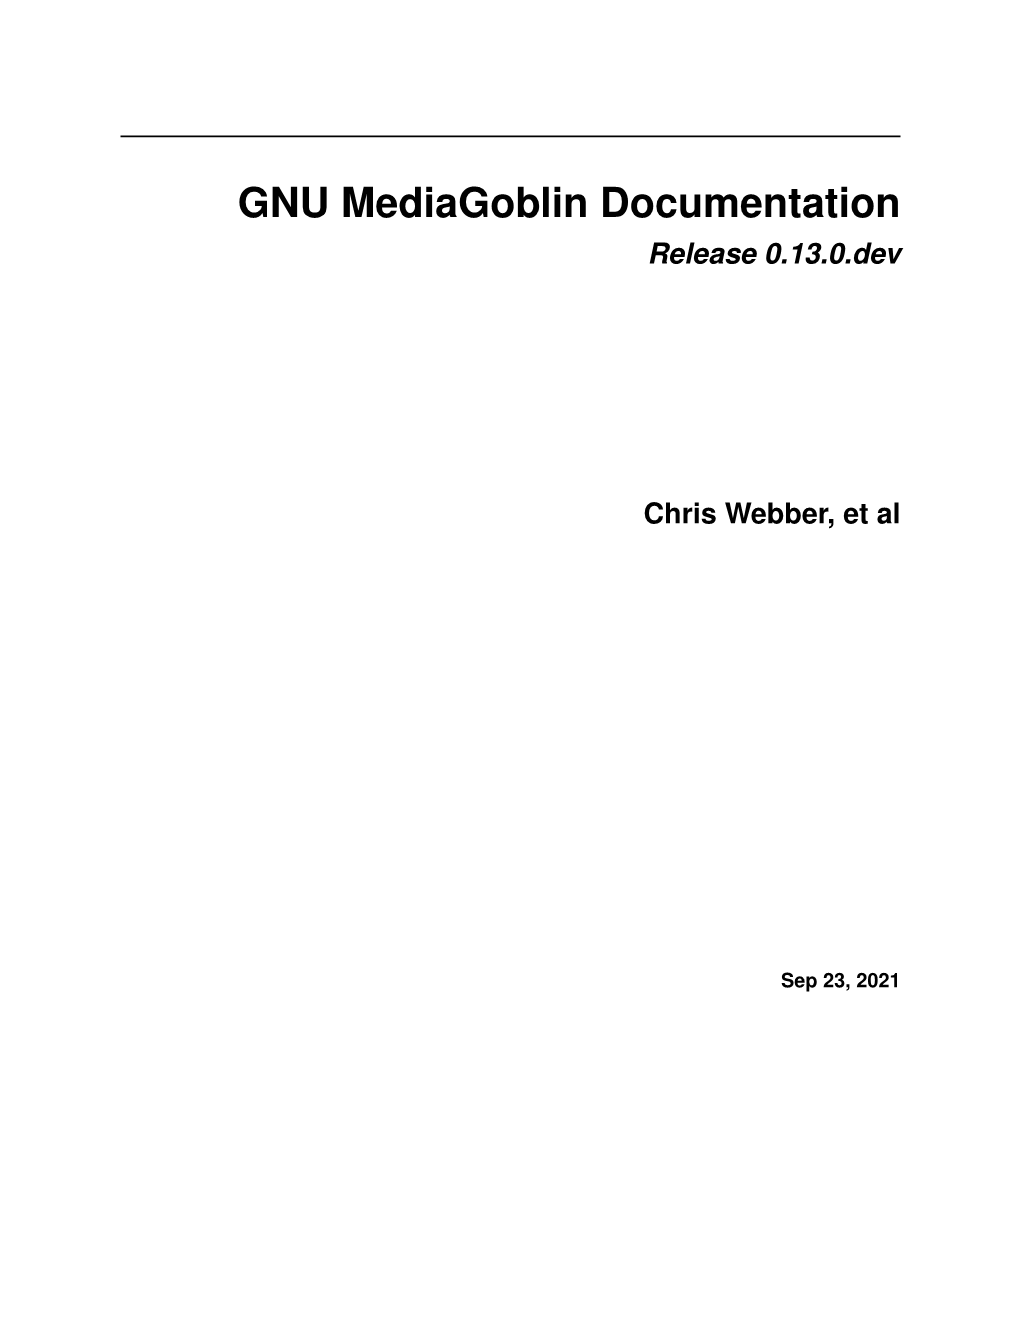 GNU Mediagoblin Documentation Release 0.13.0.Dev